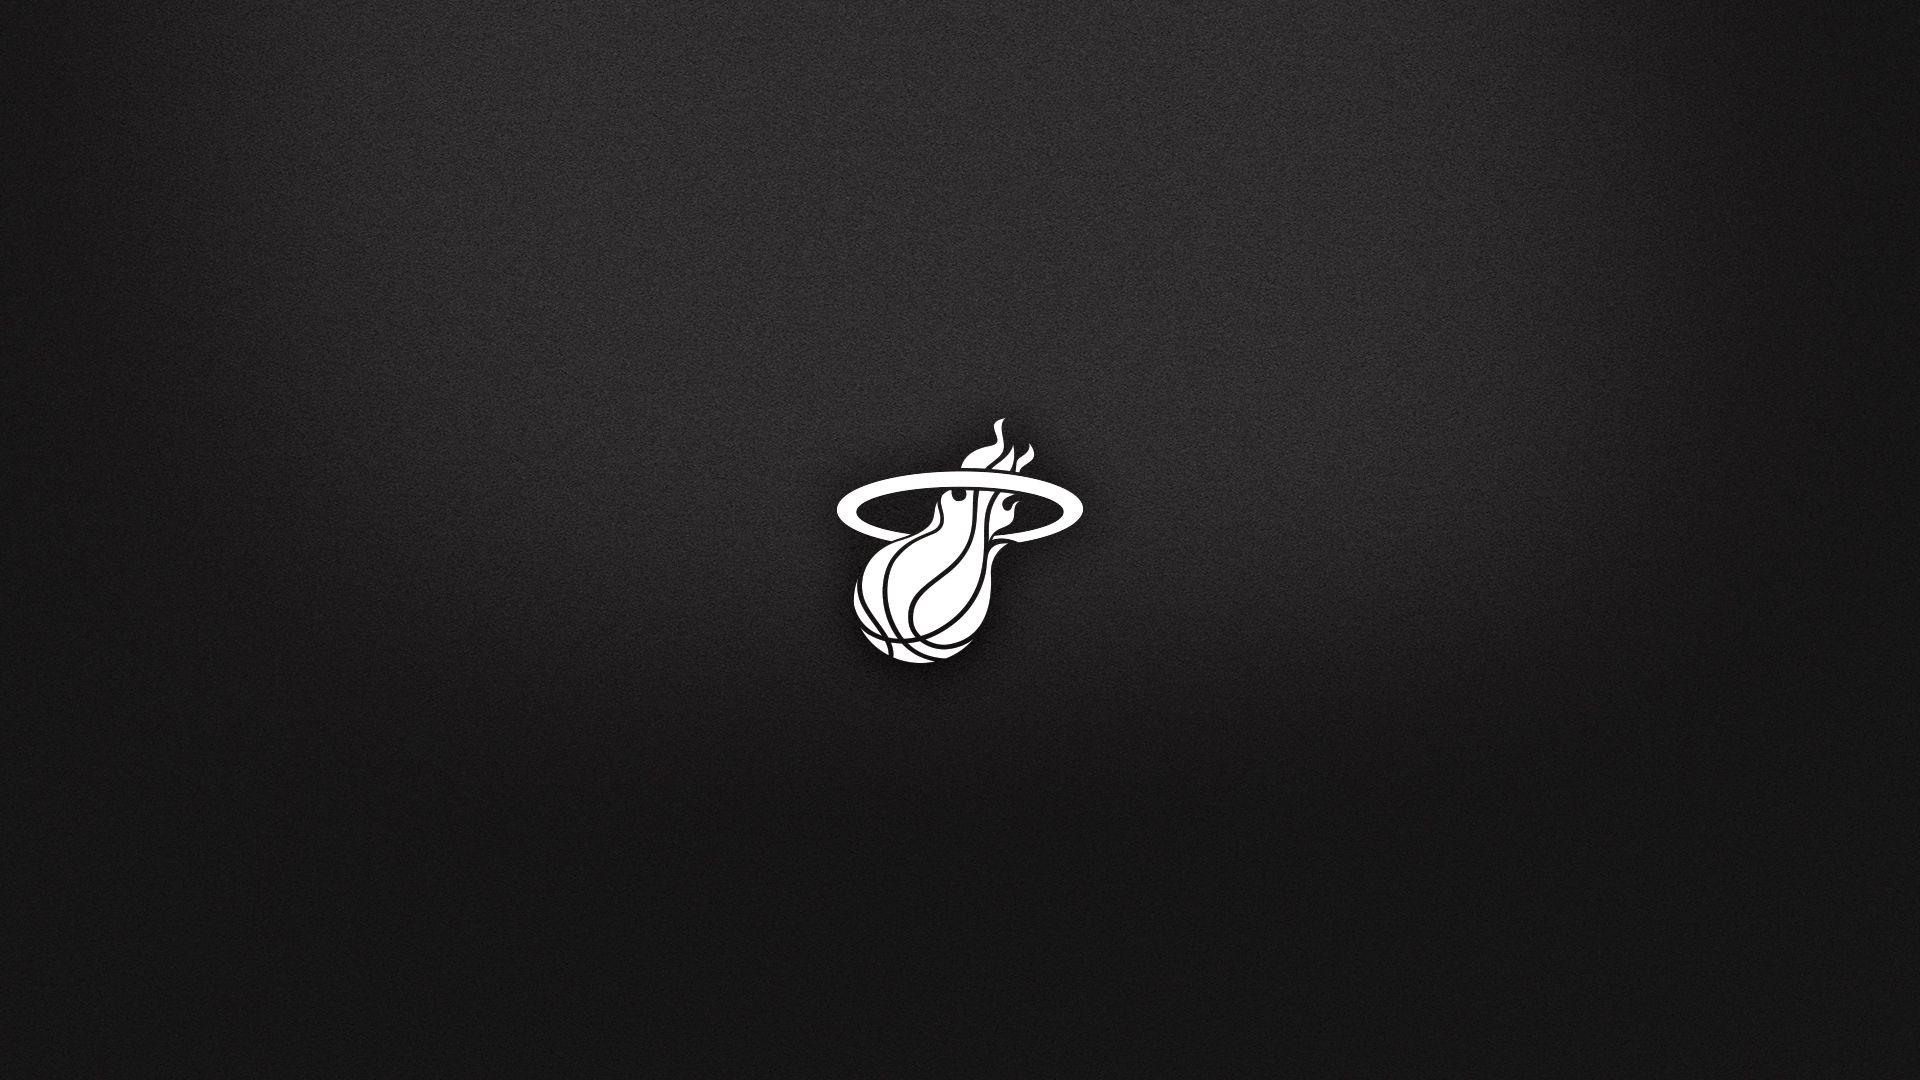 Black and White Miami Heat Logo - 热火新赛季壁纸分享